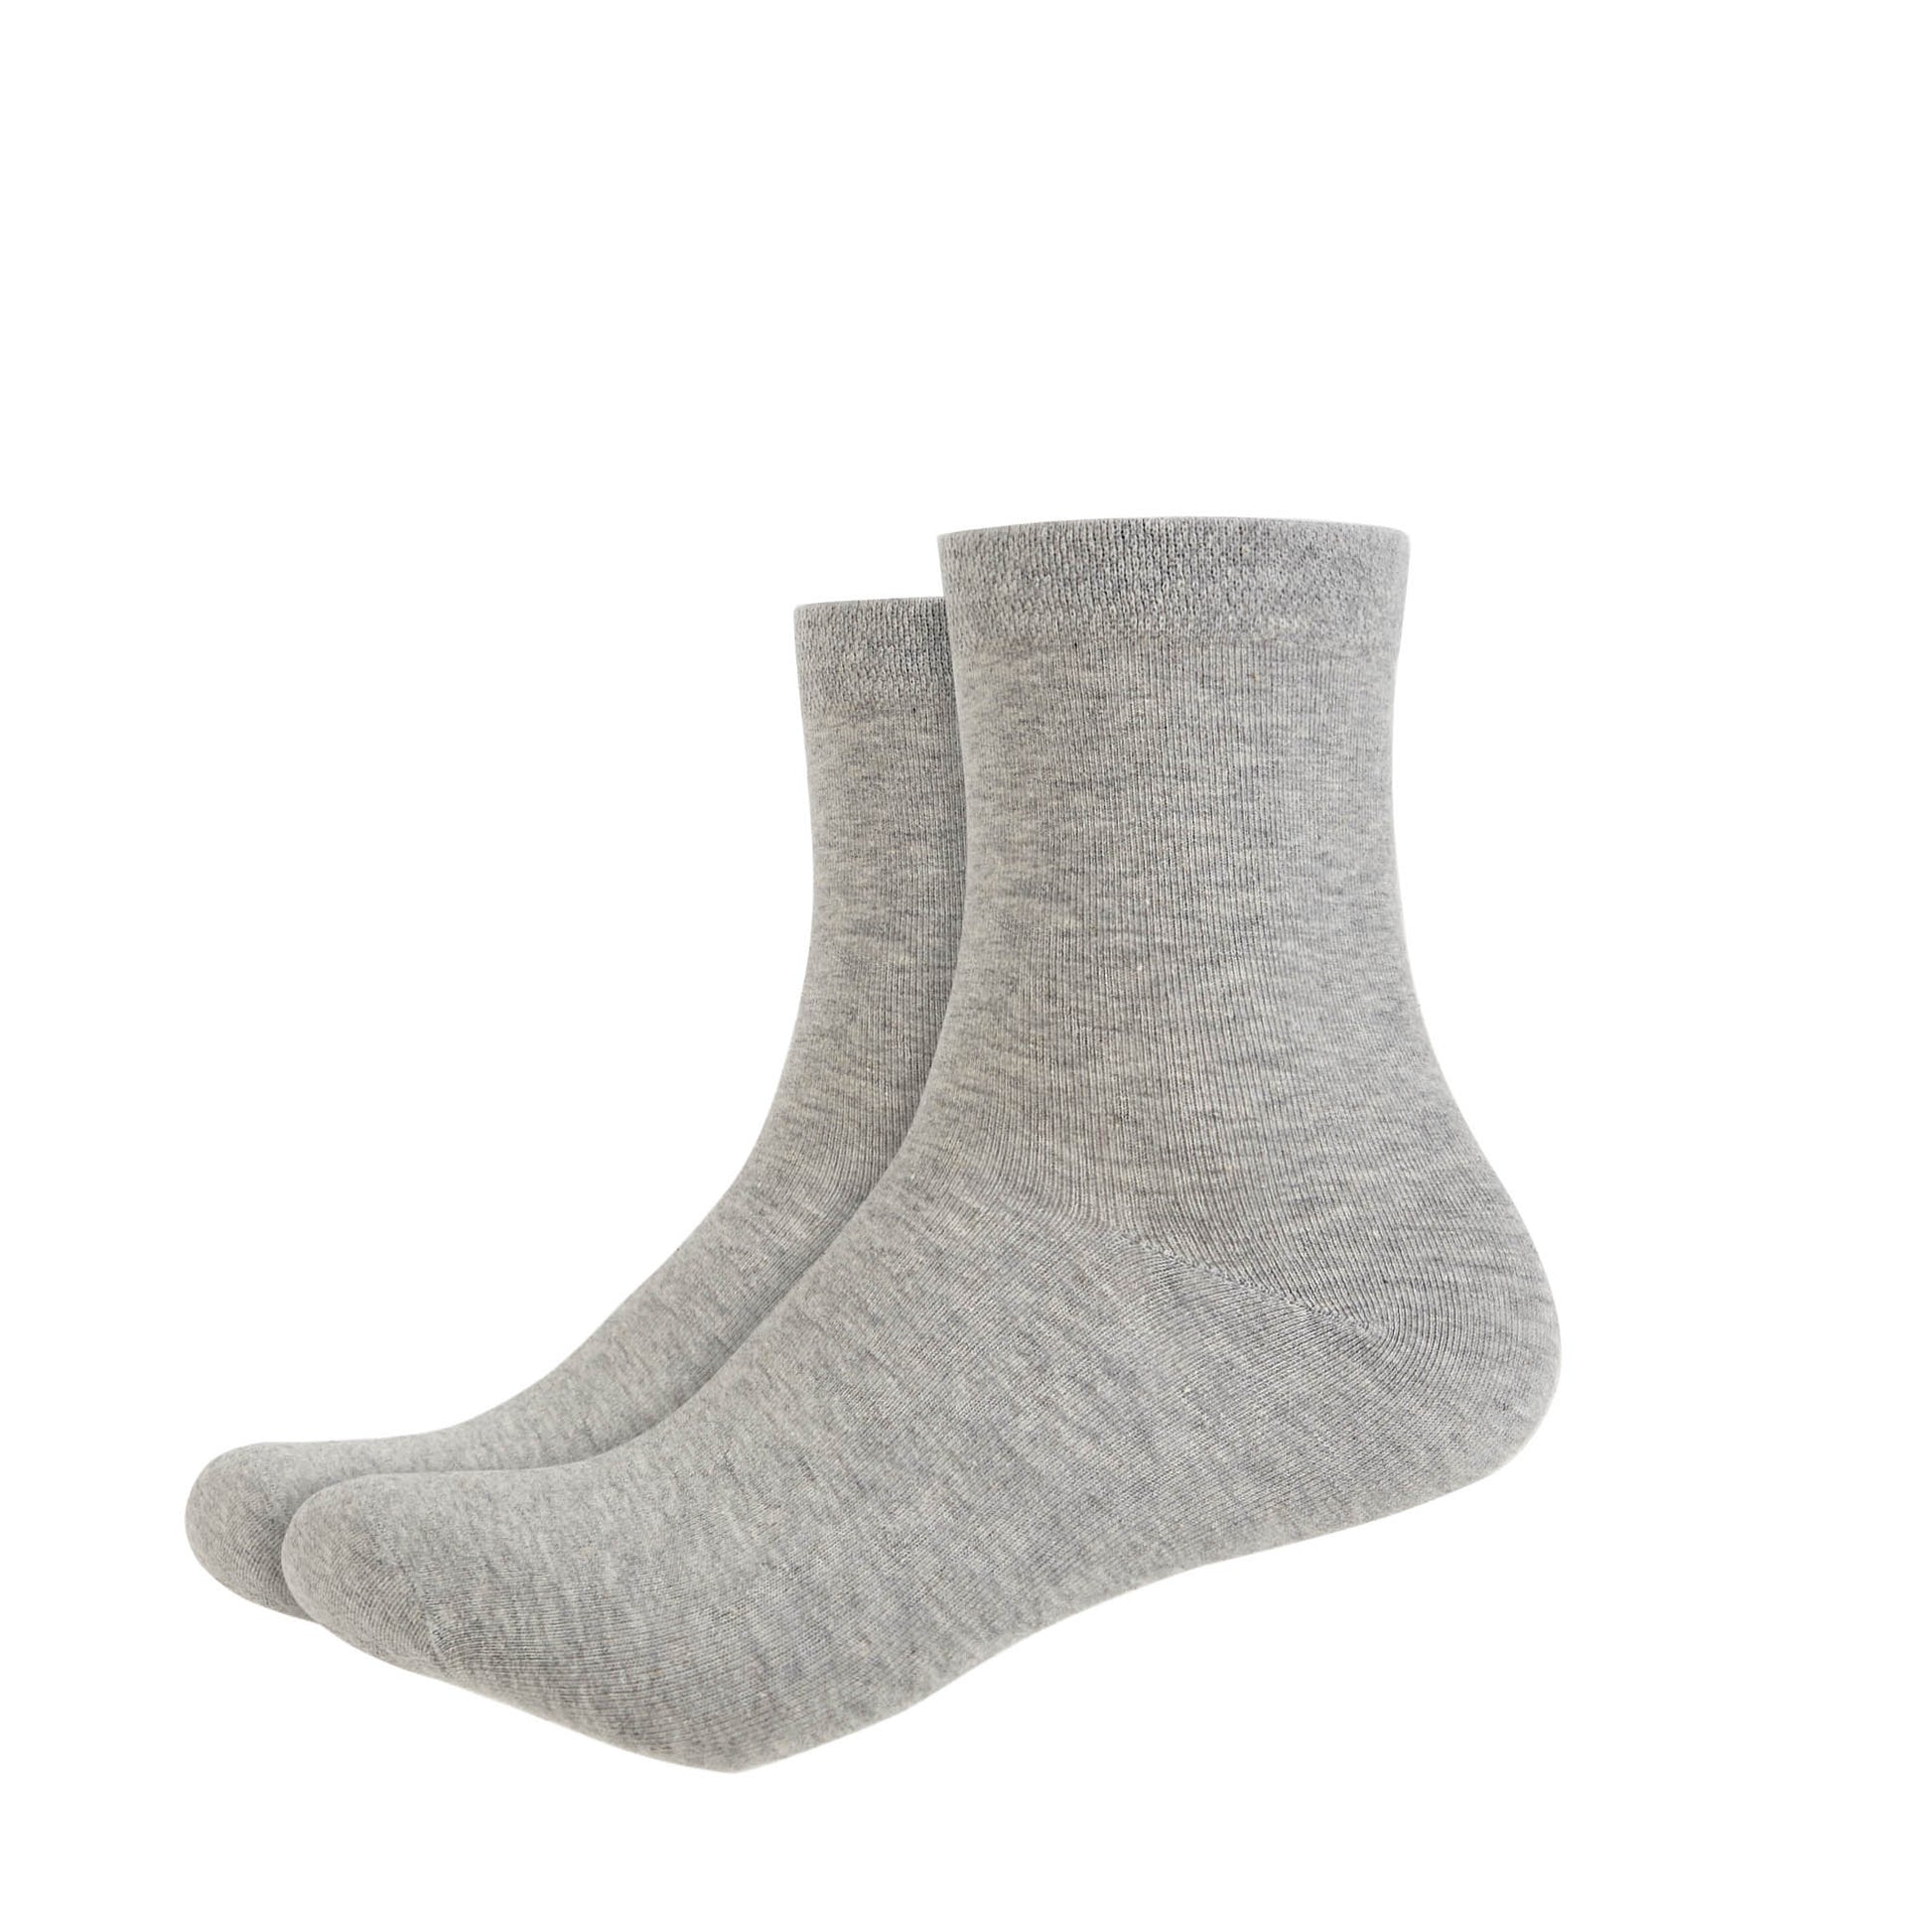 Basic Plain Quarter Length Cotton Socks - IDENTITY Apparel Shop